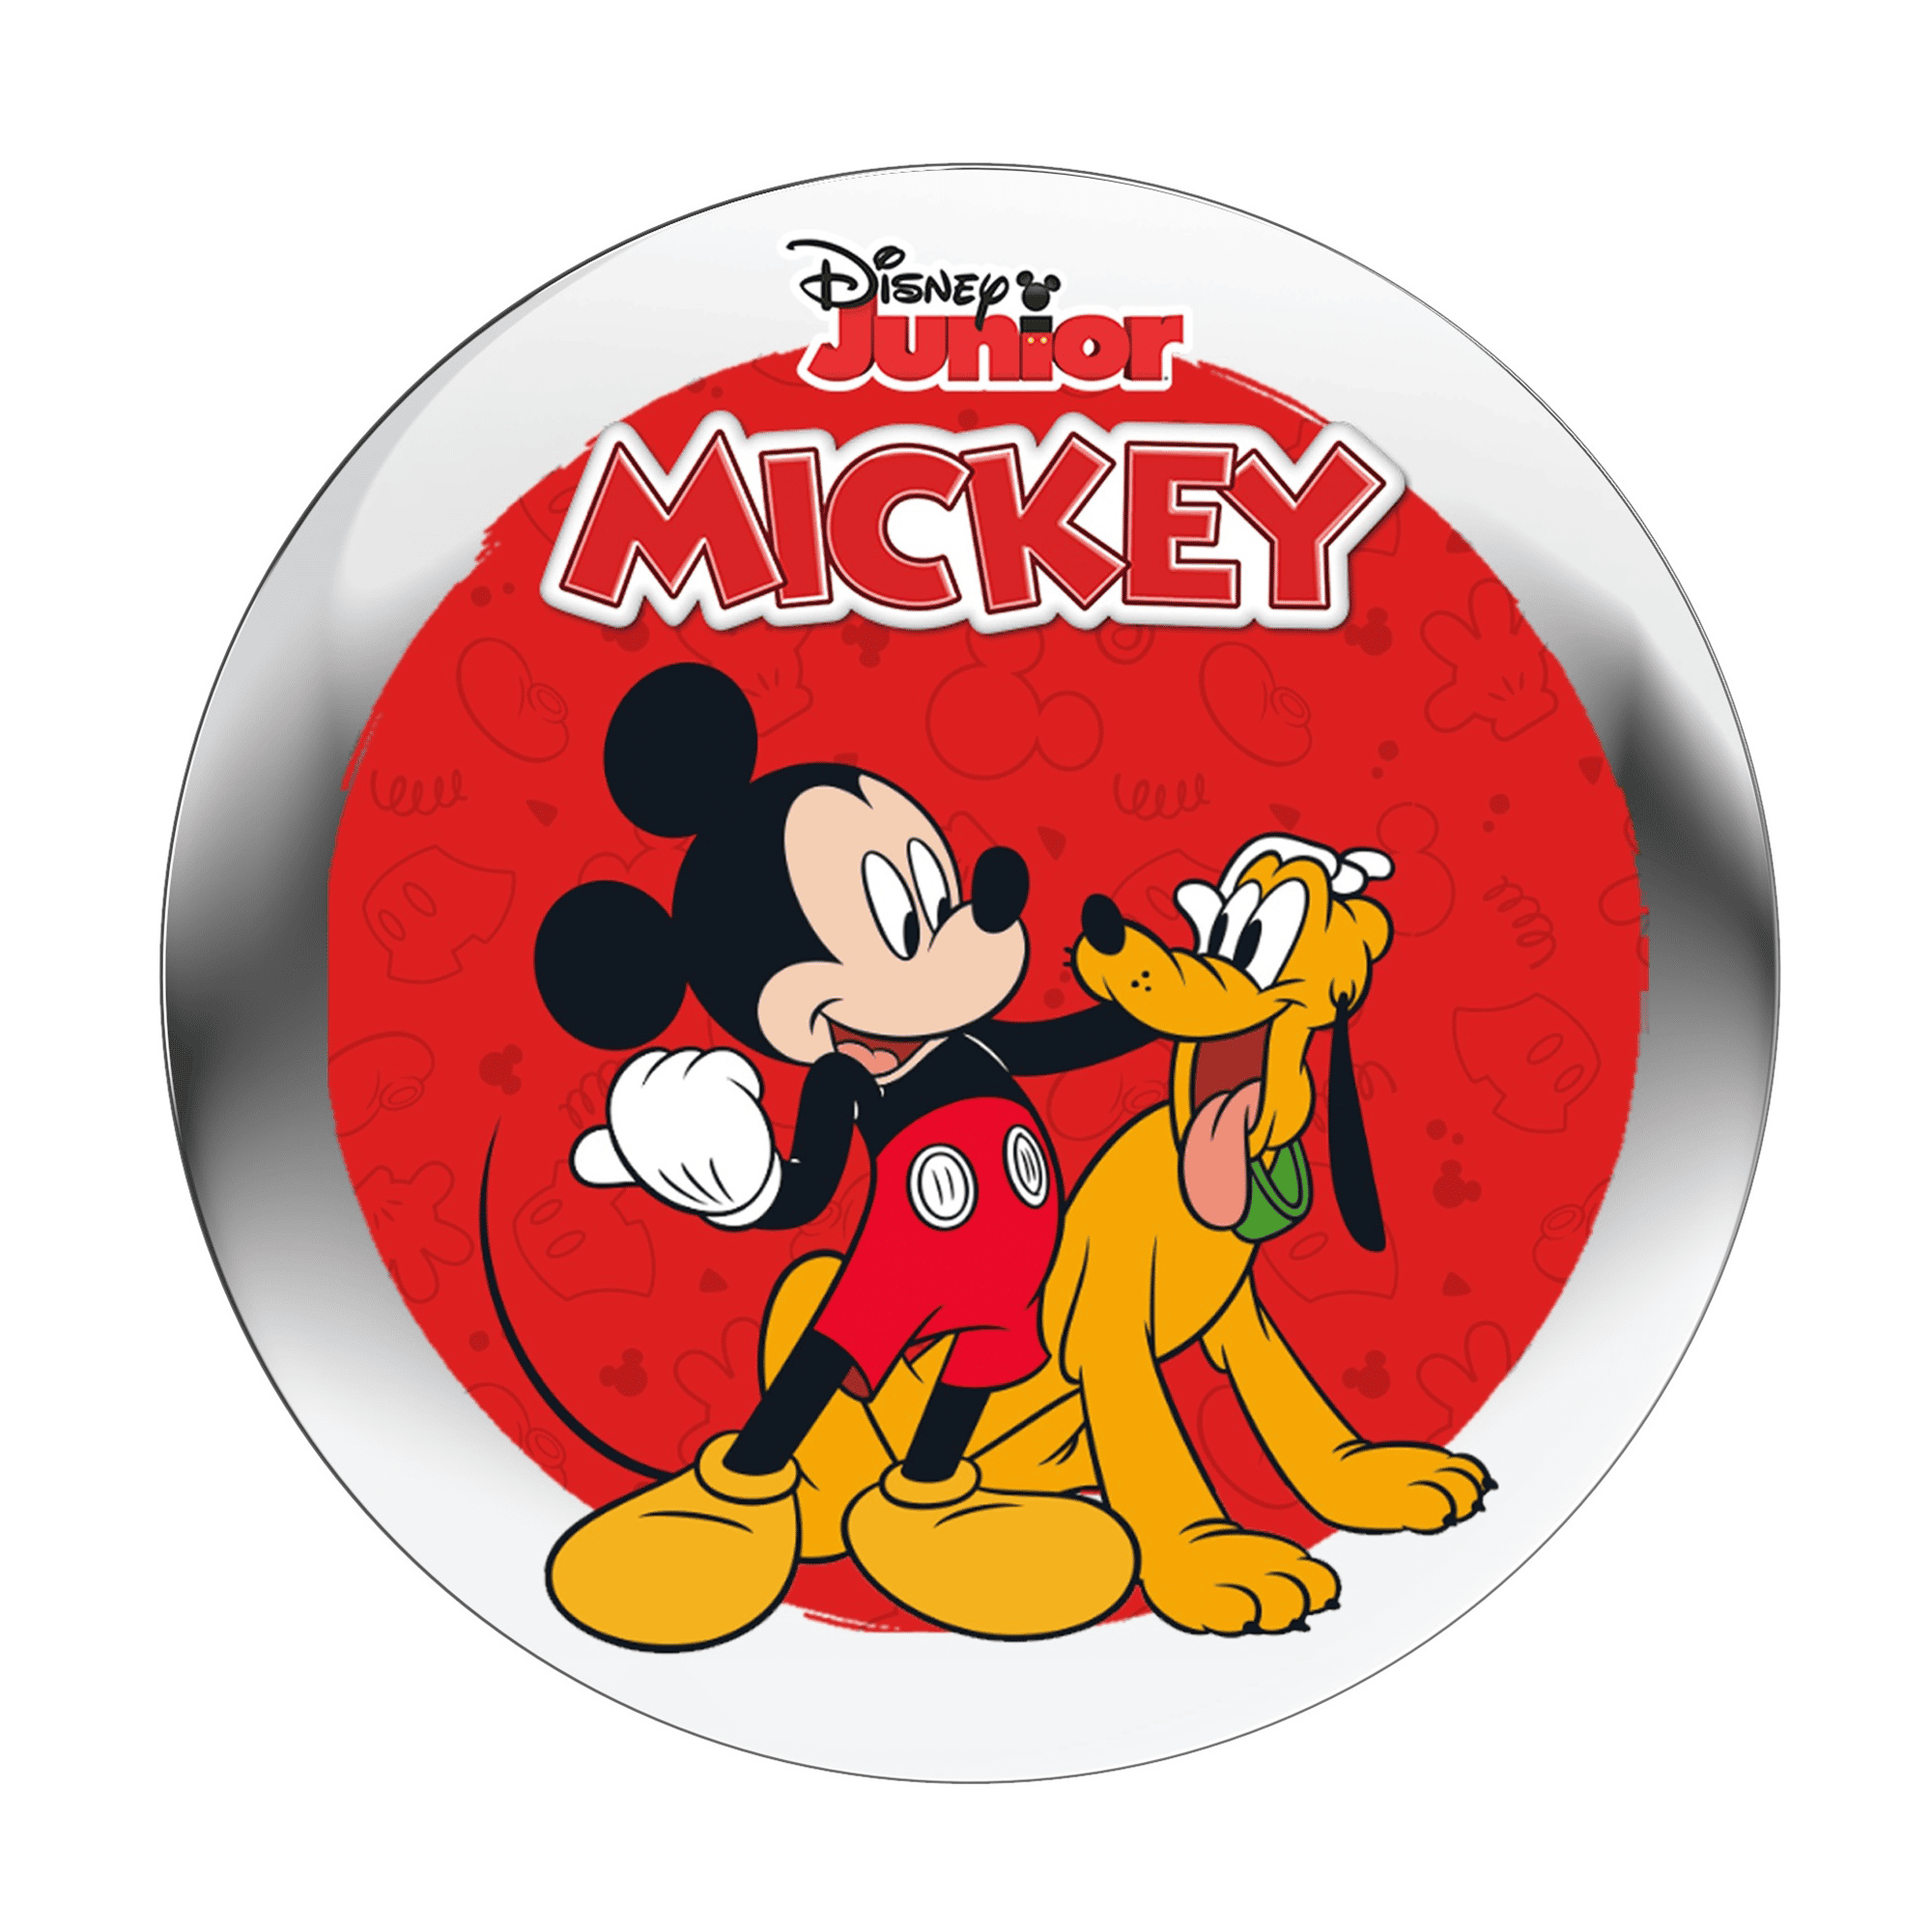 StoryShield Disney Collection - Mickey Mouse onanoff Rot 2000583661405 1